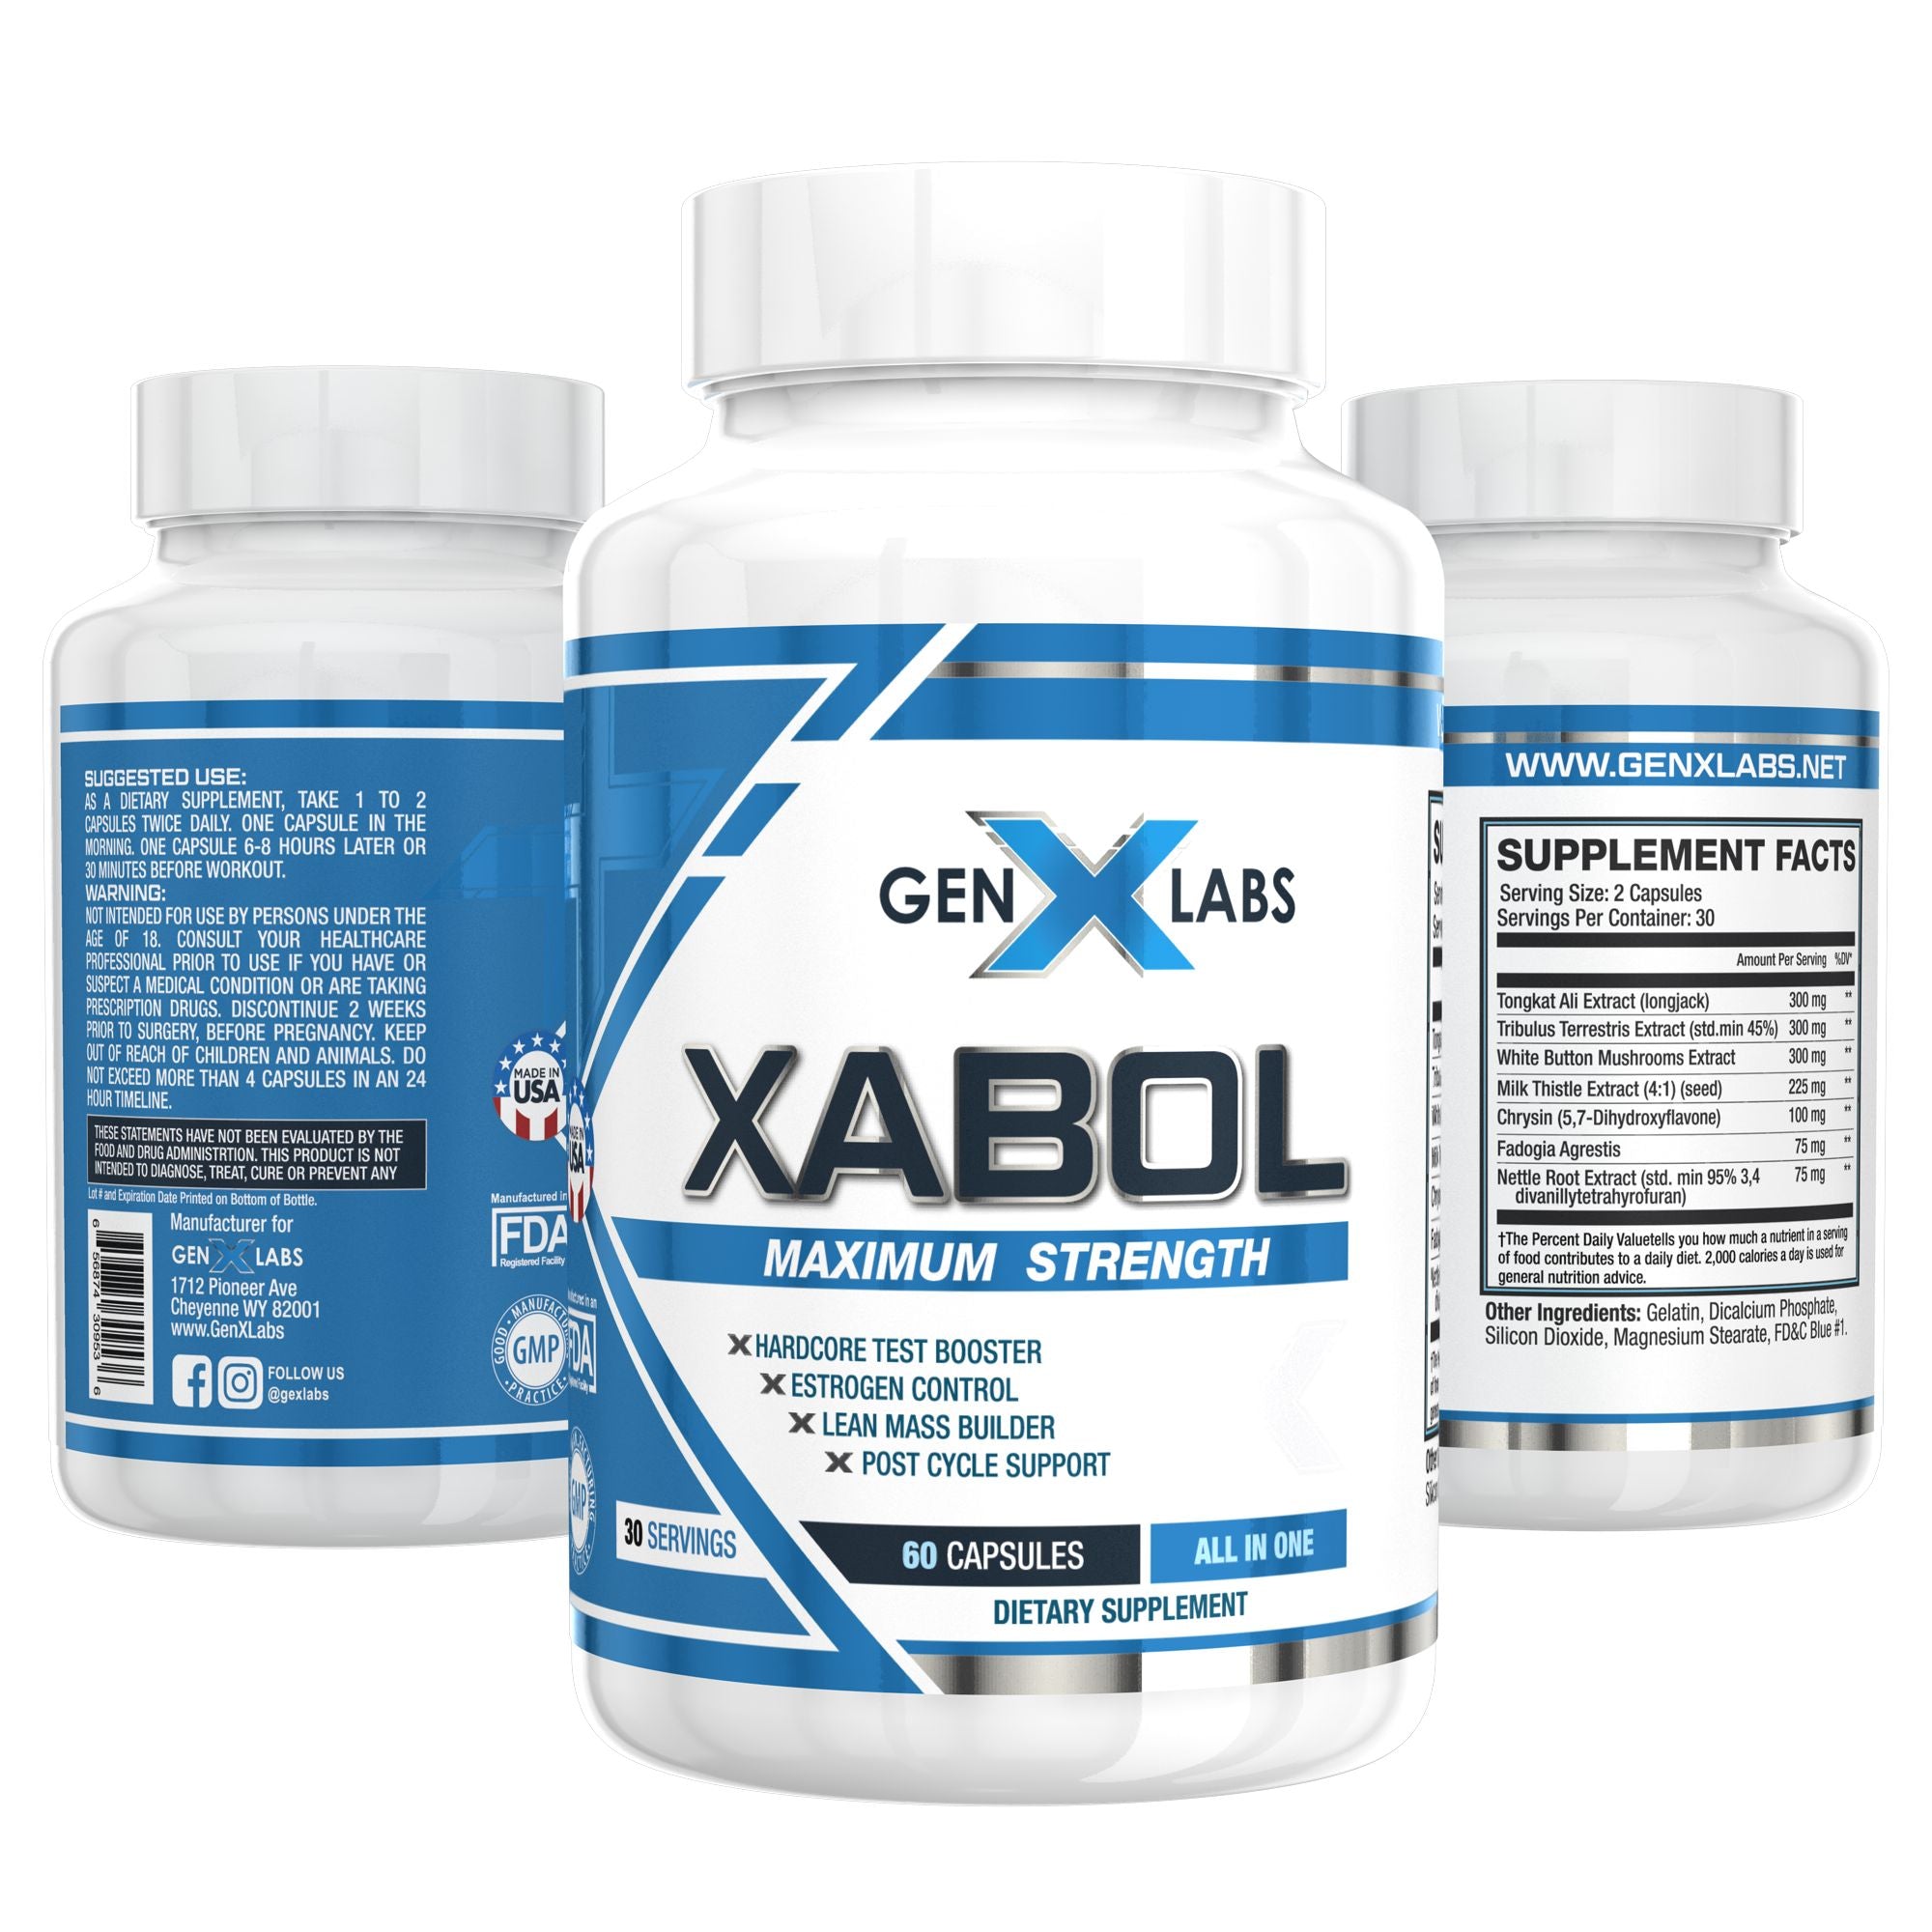 GenXLabs XABOL Maximum Strength Double |Lowcostvitamin.com